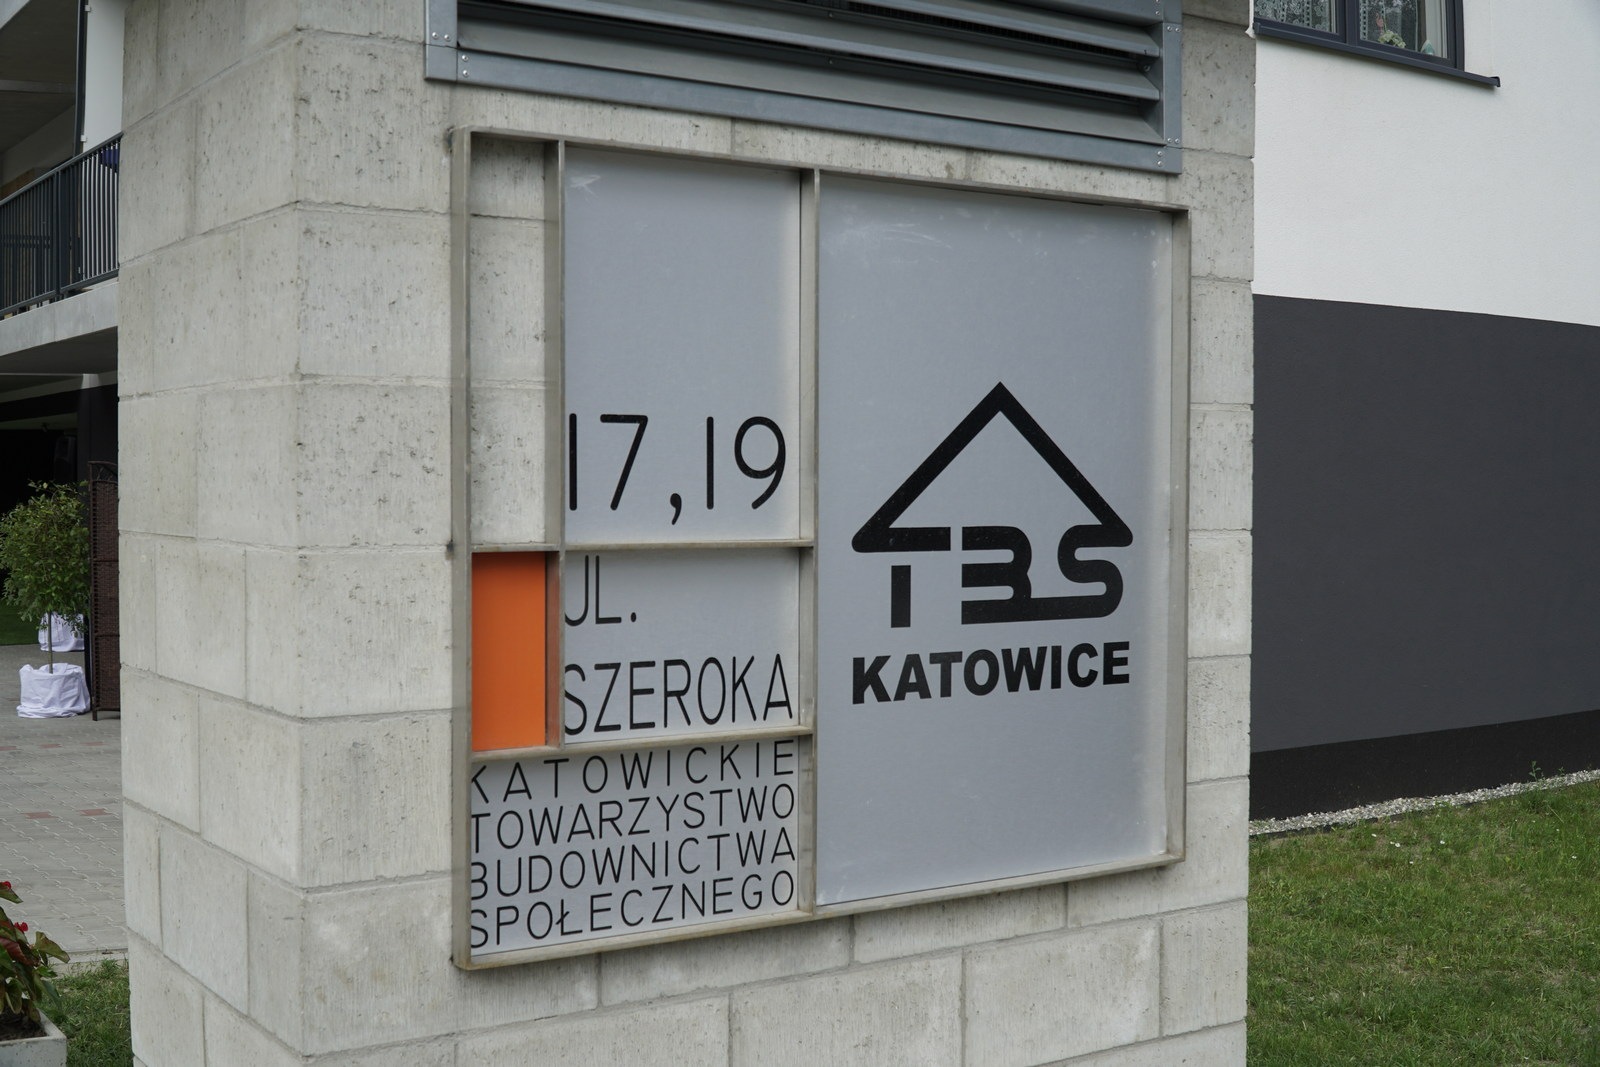 Ul. Szeroka 17 19, Katowice